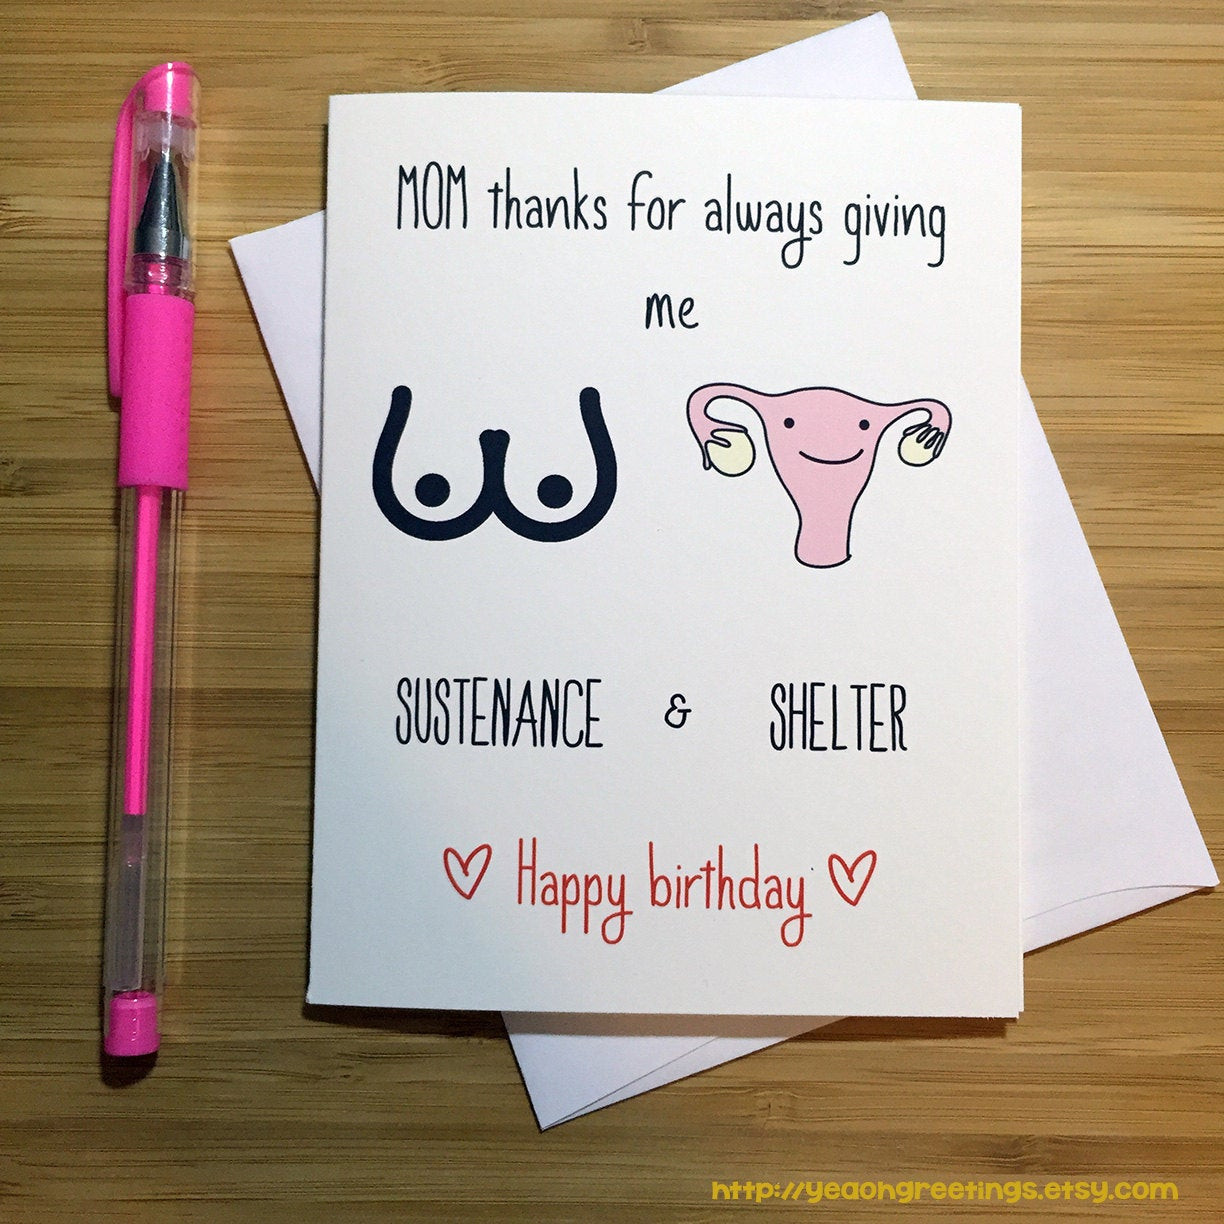 Best ideas about Happy Birthday Card Idea
. Save or Pin Happy Birthday Mom Funny Mom Card Inappropriate Card Card Now.